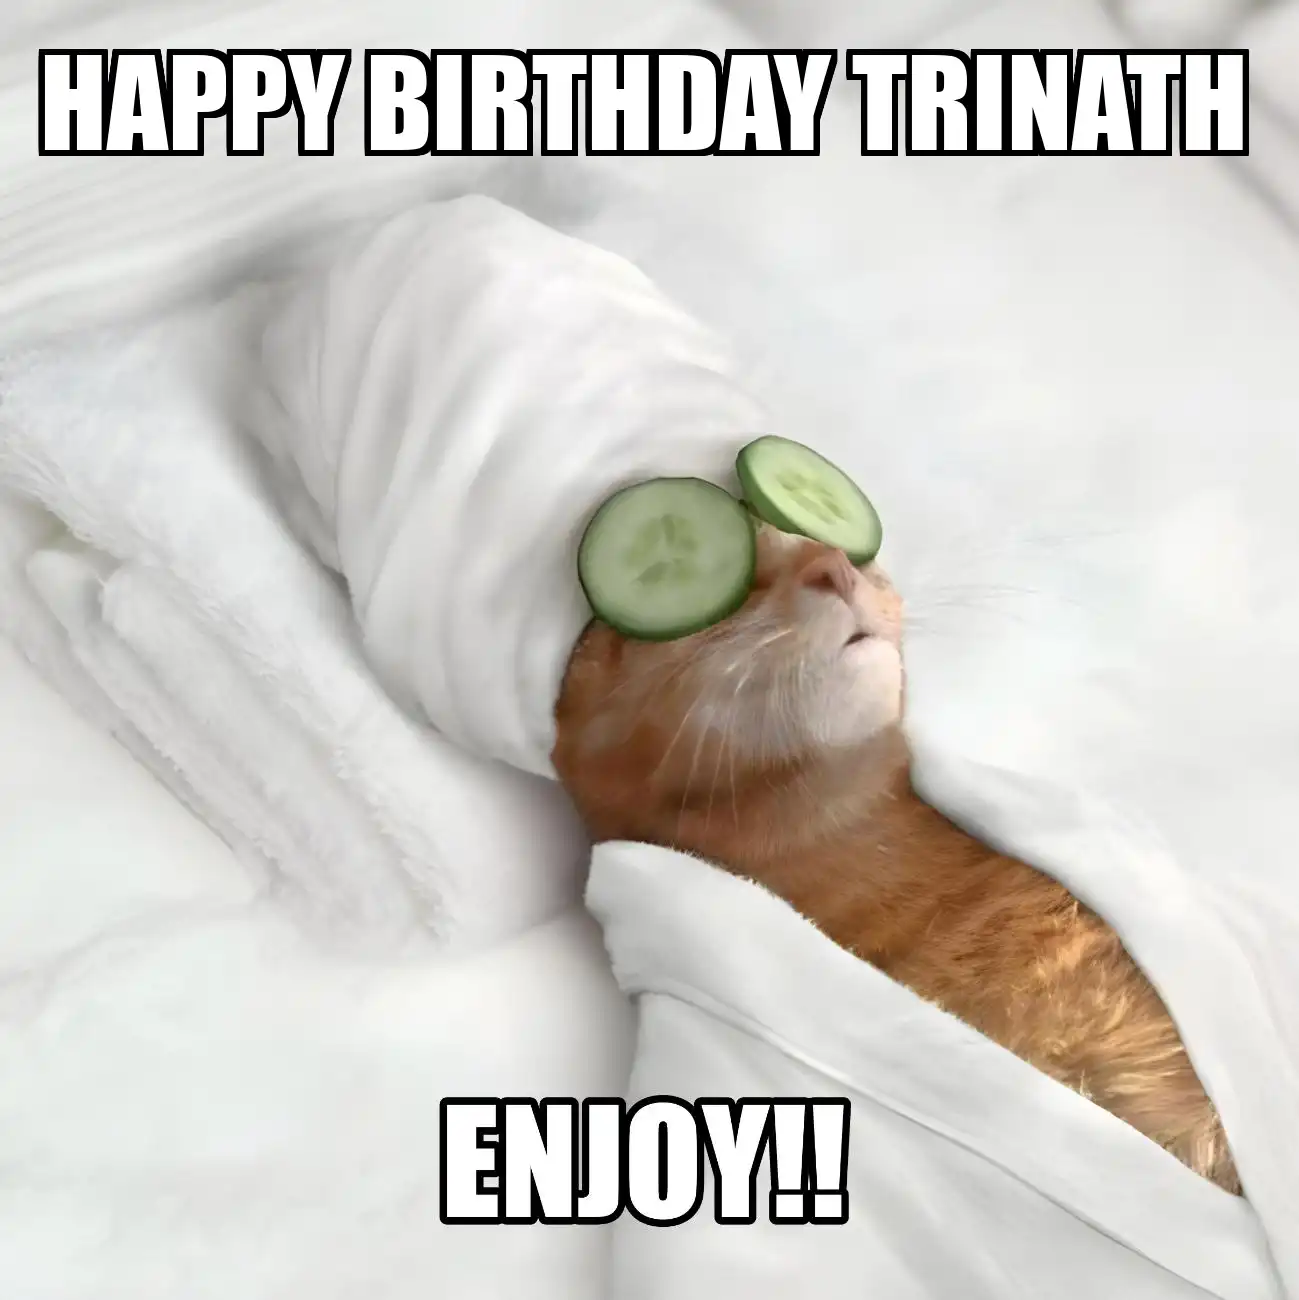 Happy Birthday Trinath Enjoy Cat Meme